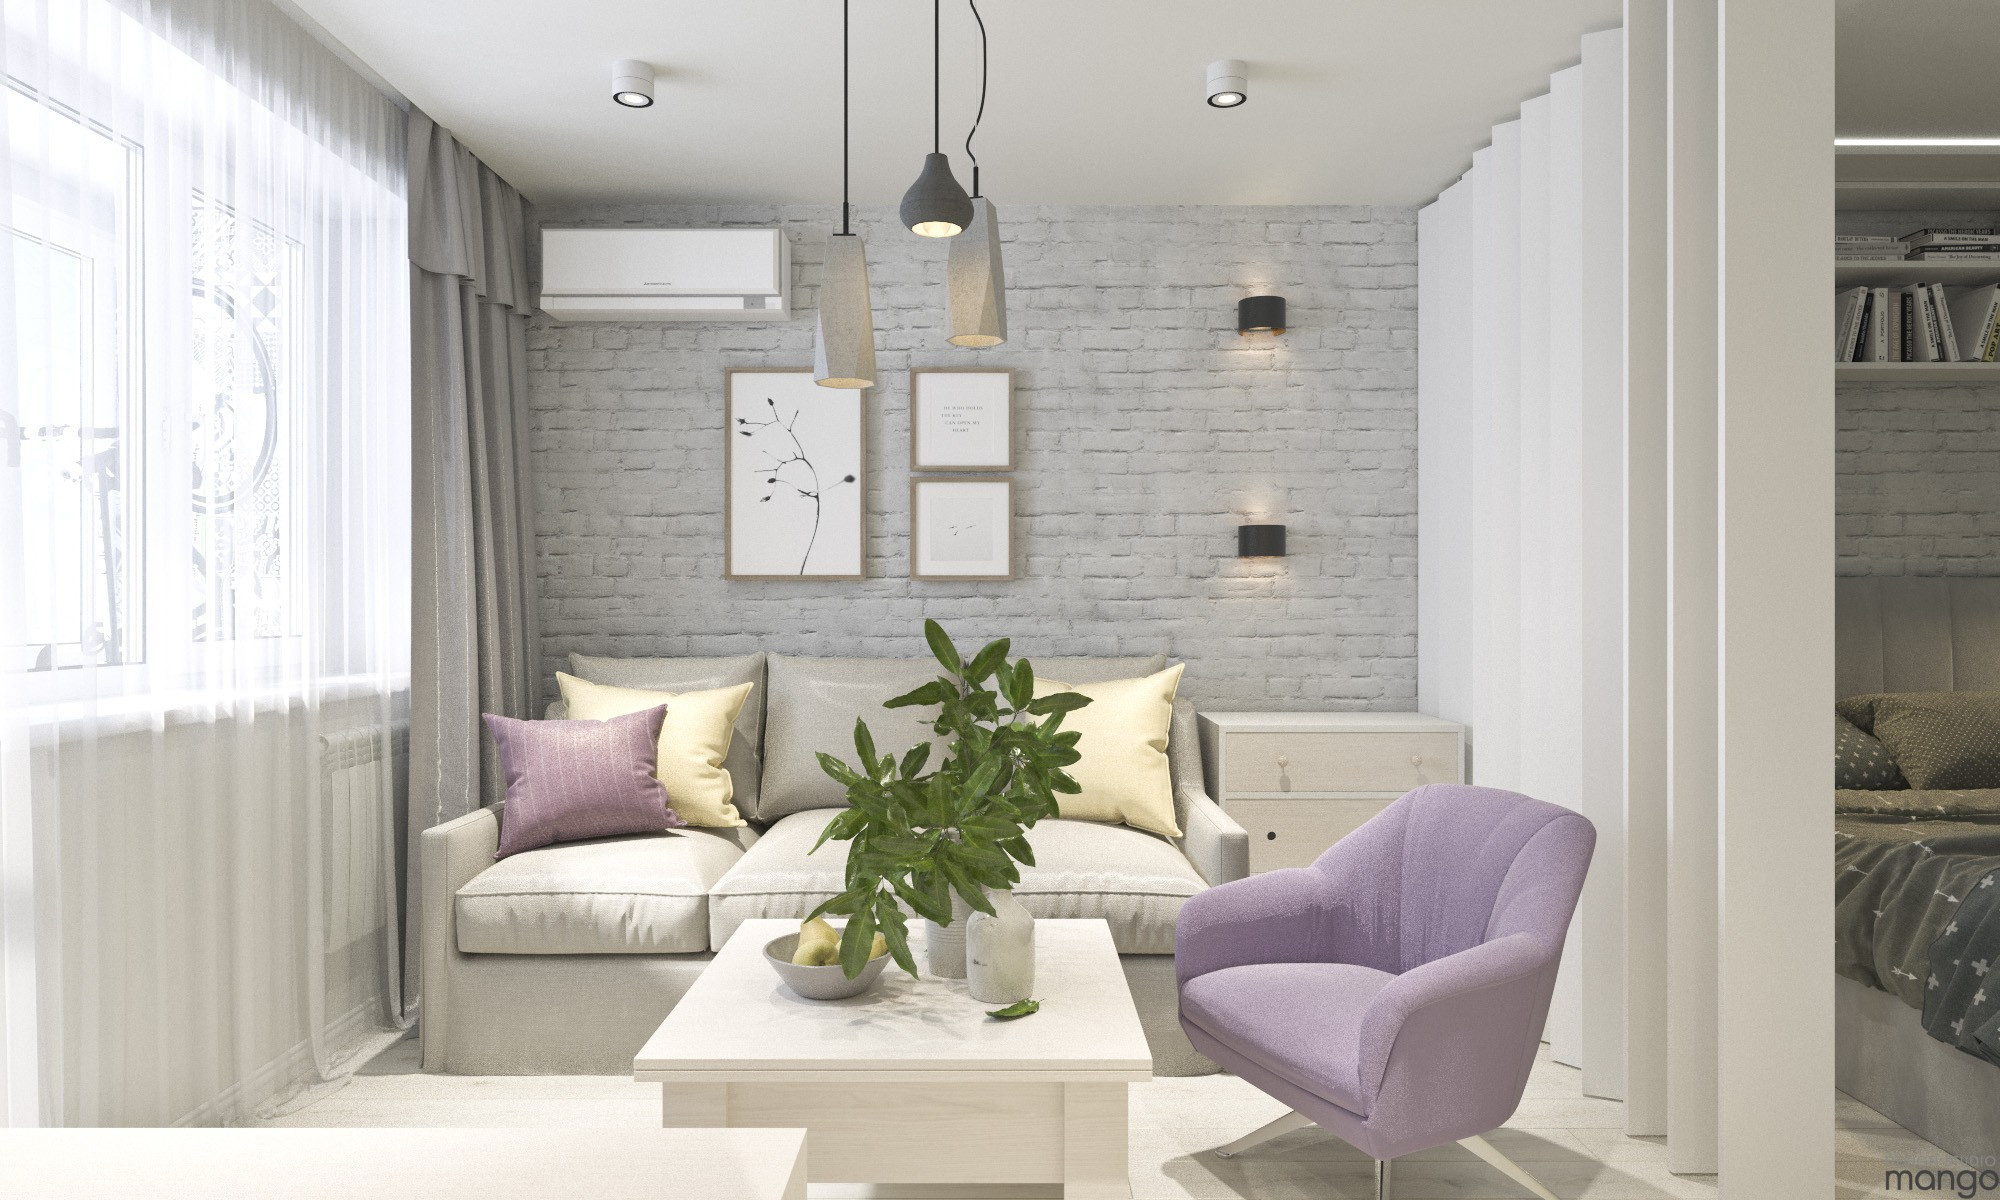 Minimalist Design Living Room
 Types of 3 Small Living Room Designs bined Between